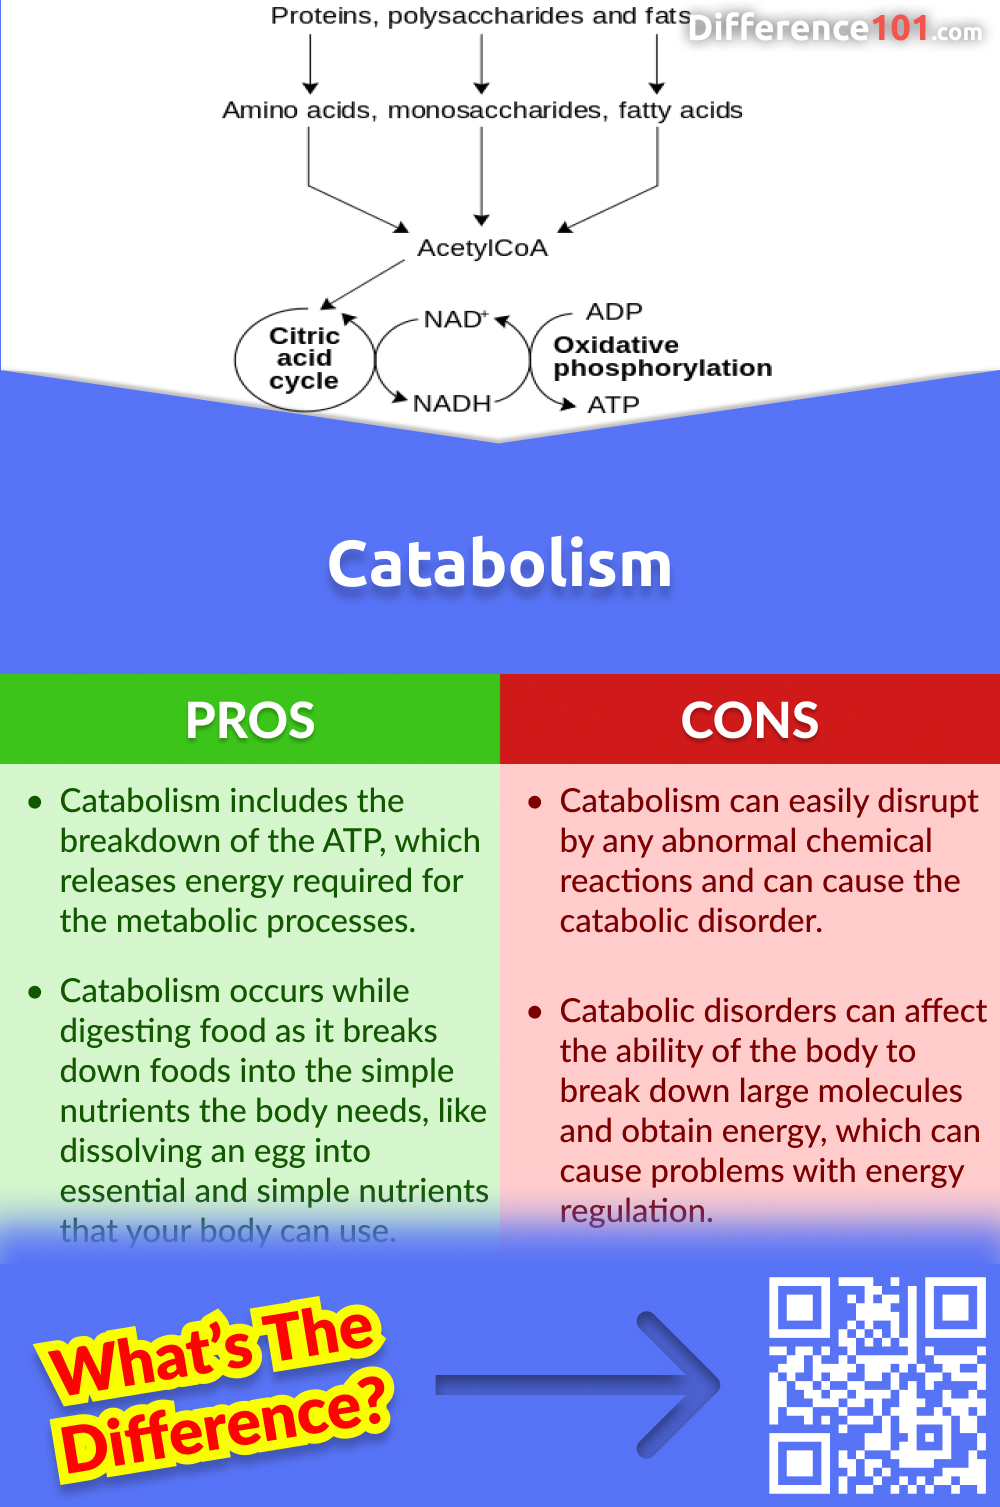 Catabolism Pros and Cons